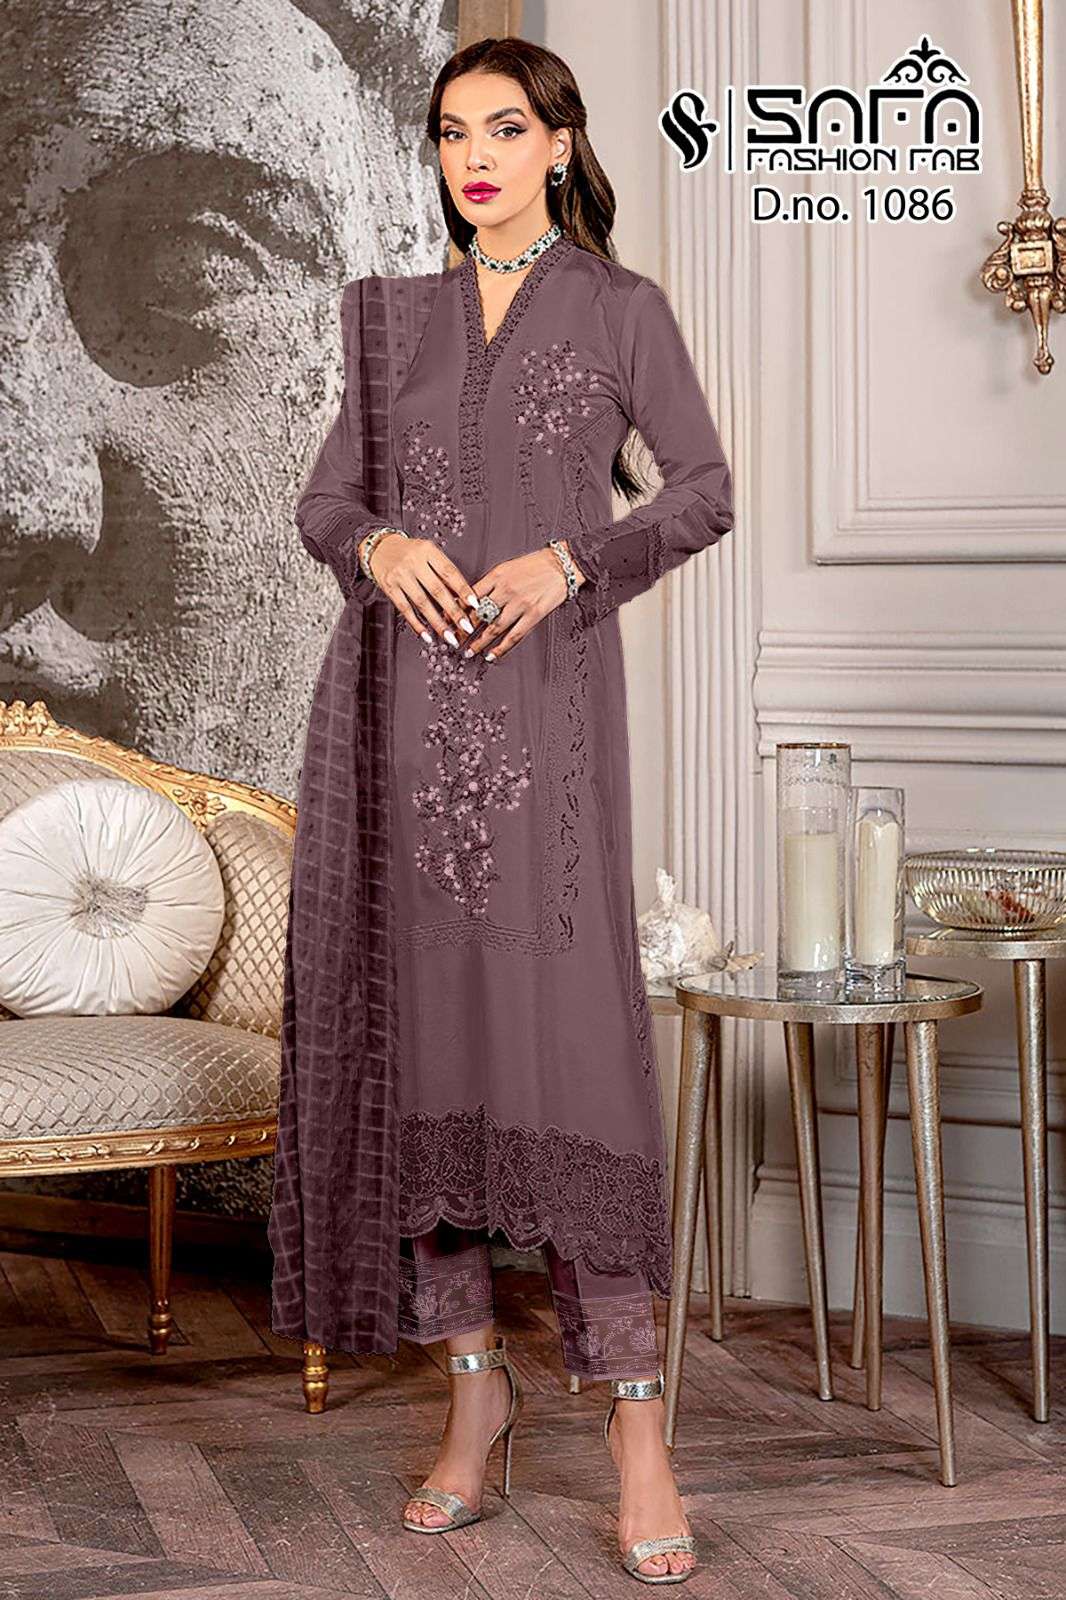 safa fashion fab 1086 series new colours exclusive designer pakistani salwar suits new collection 